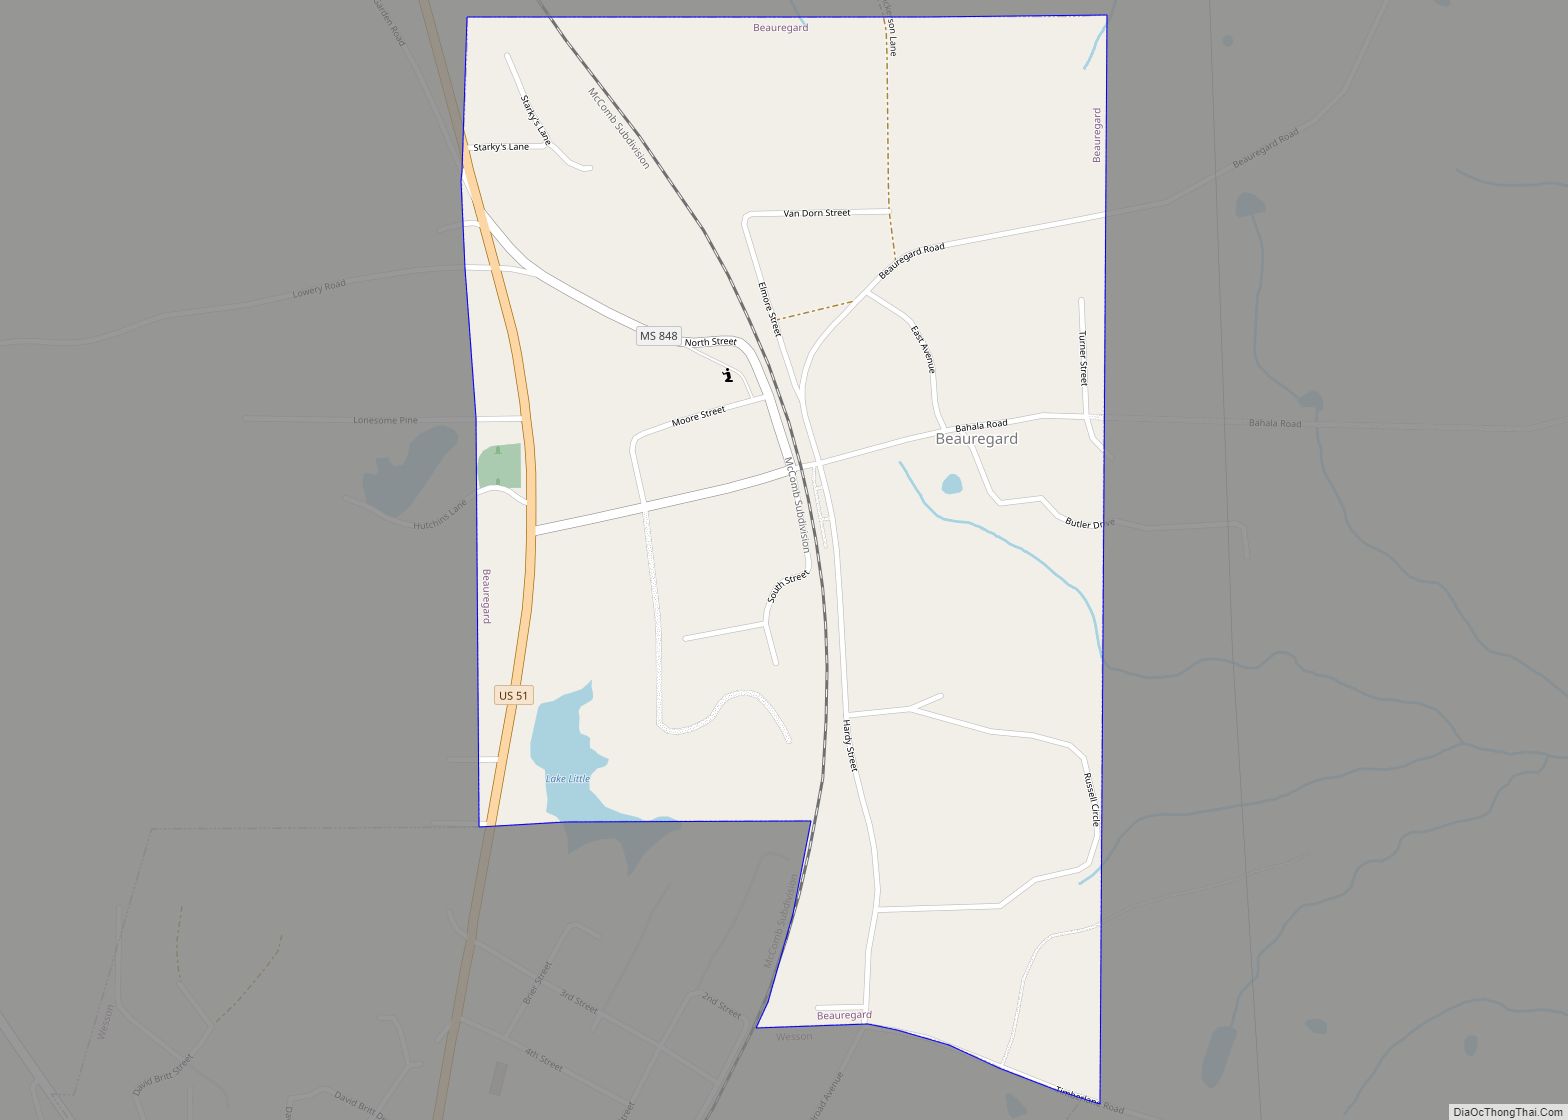 Map of Beauregard village